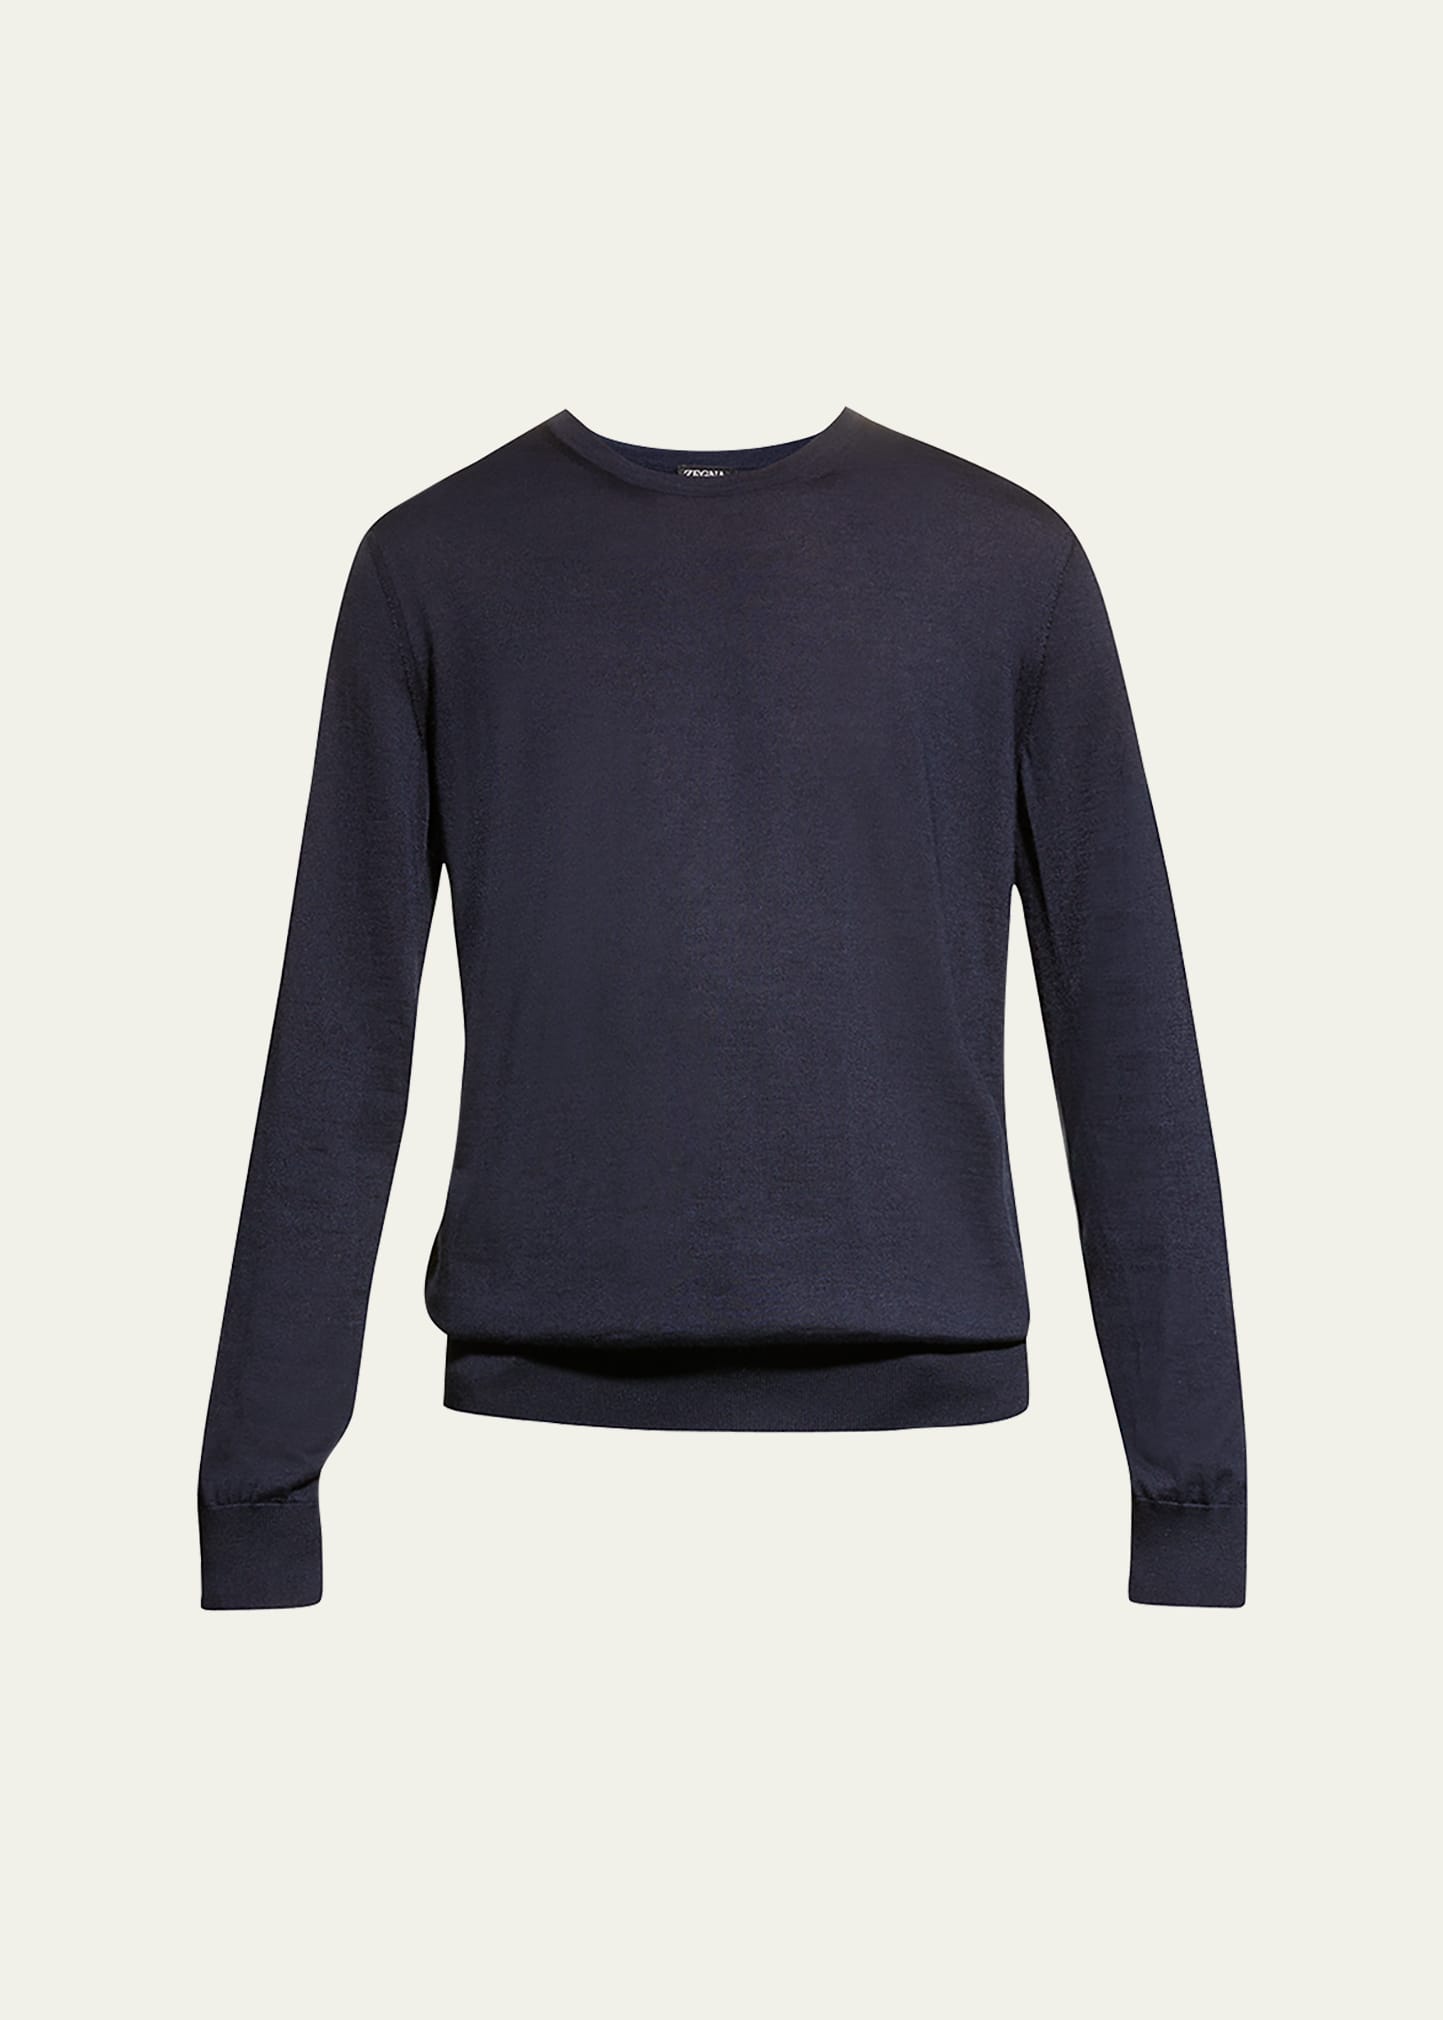 Zegna Men's Cashmere Crewneck Sweater In Navy Solid